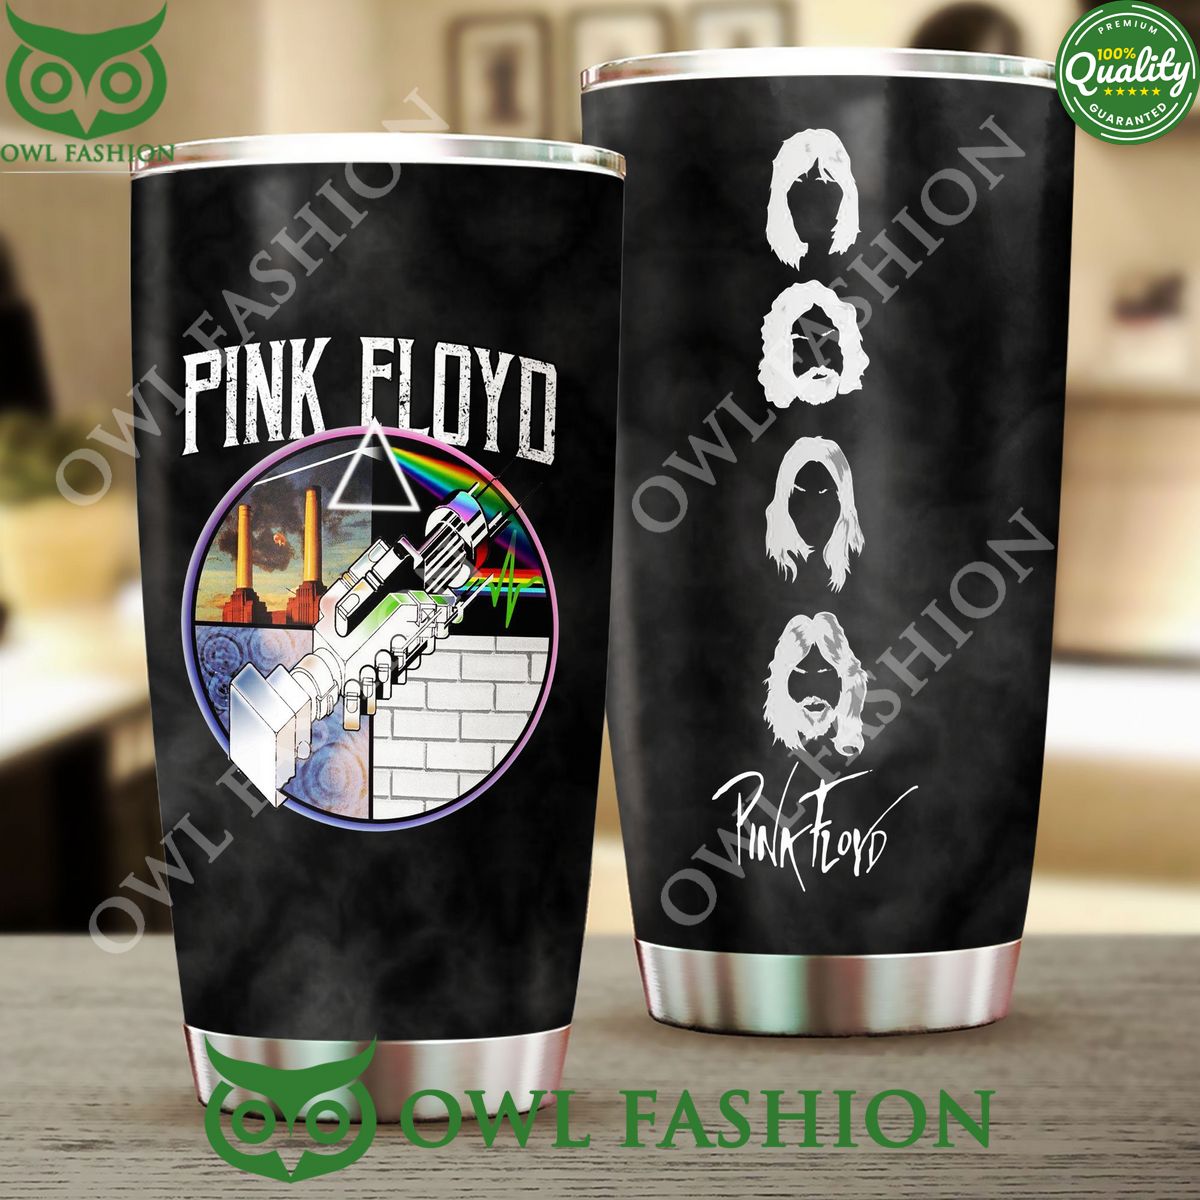 Pink Floyd Member Portrait Black Tumbler Cup